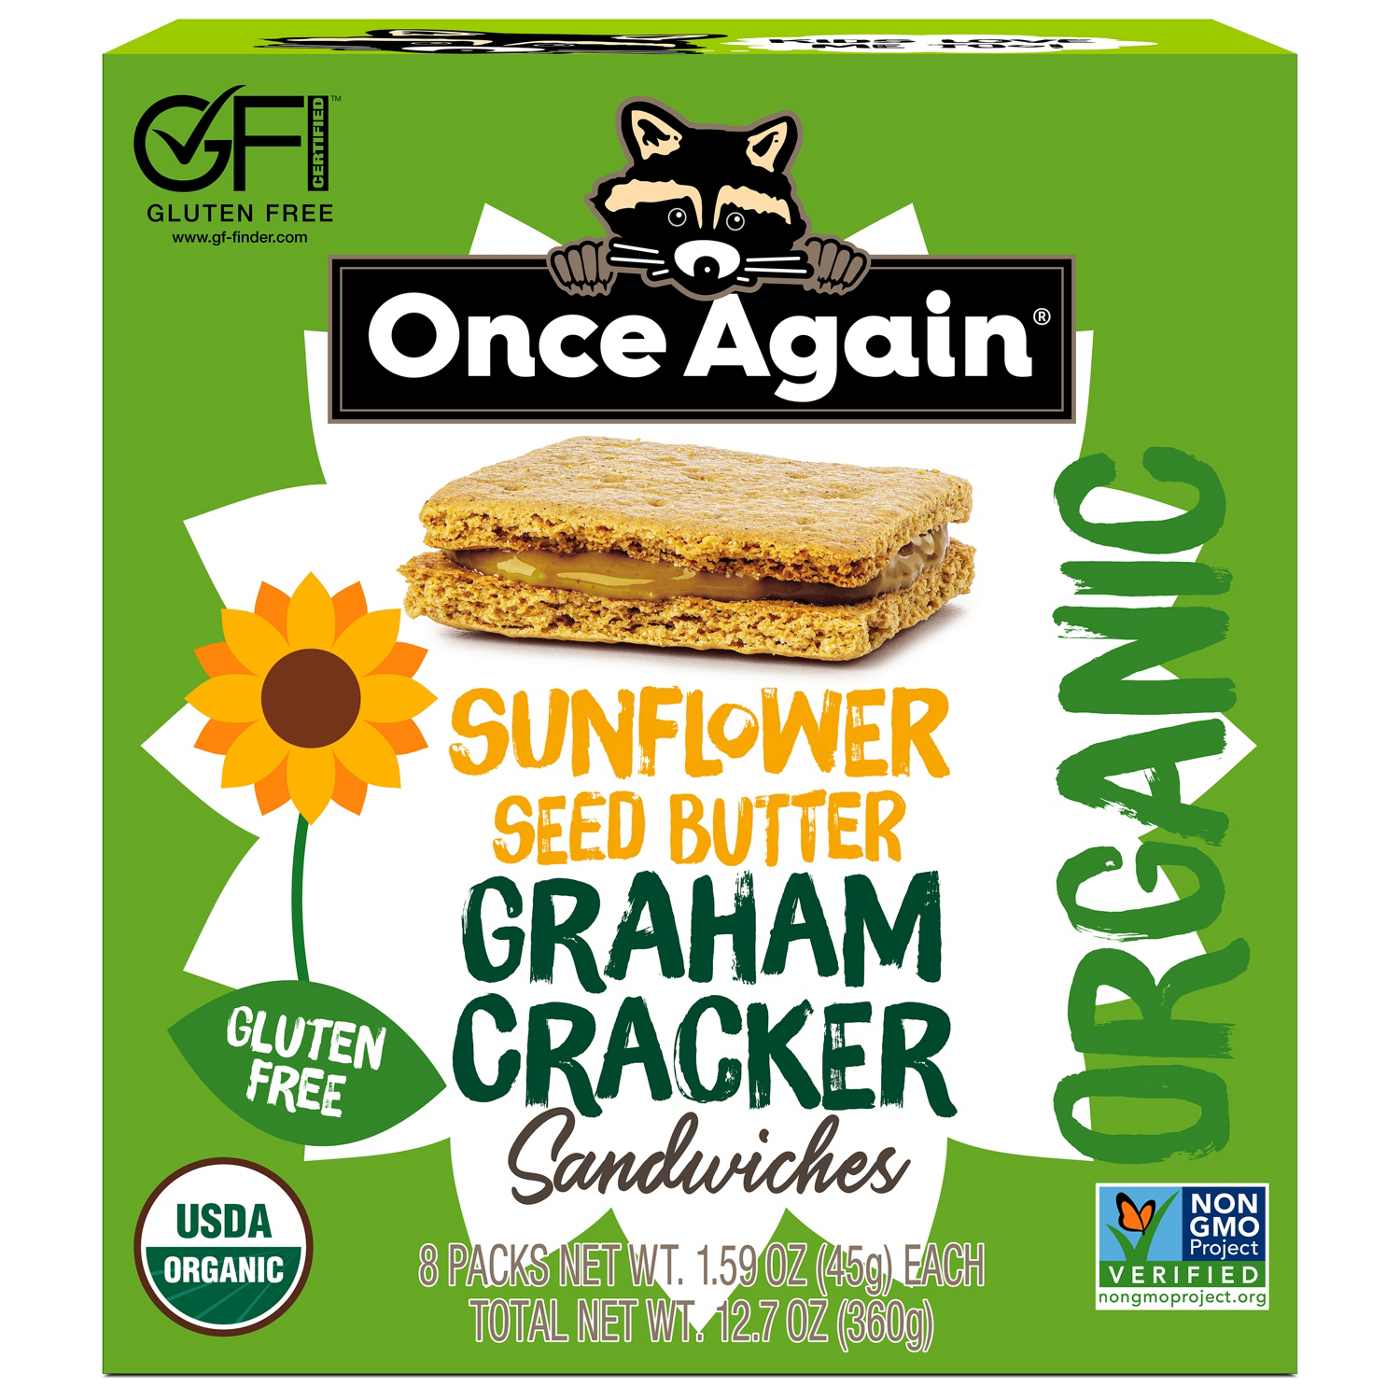 Once Again Sunflower Seed Butter Graham Cracker Sandwich; image 1 of 5